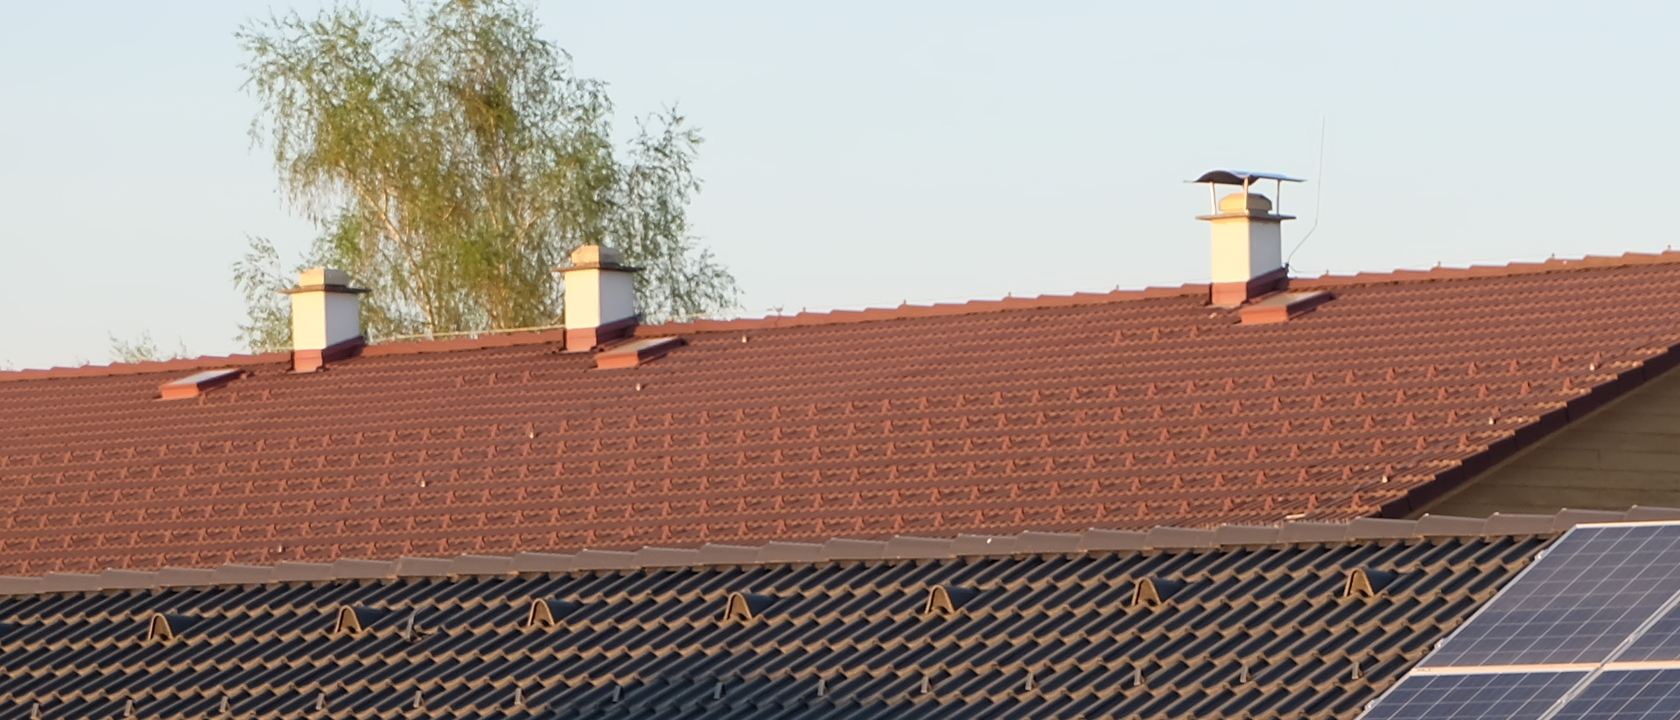 Dach-und-Rauchfang